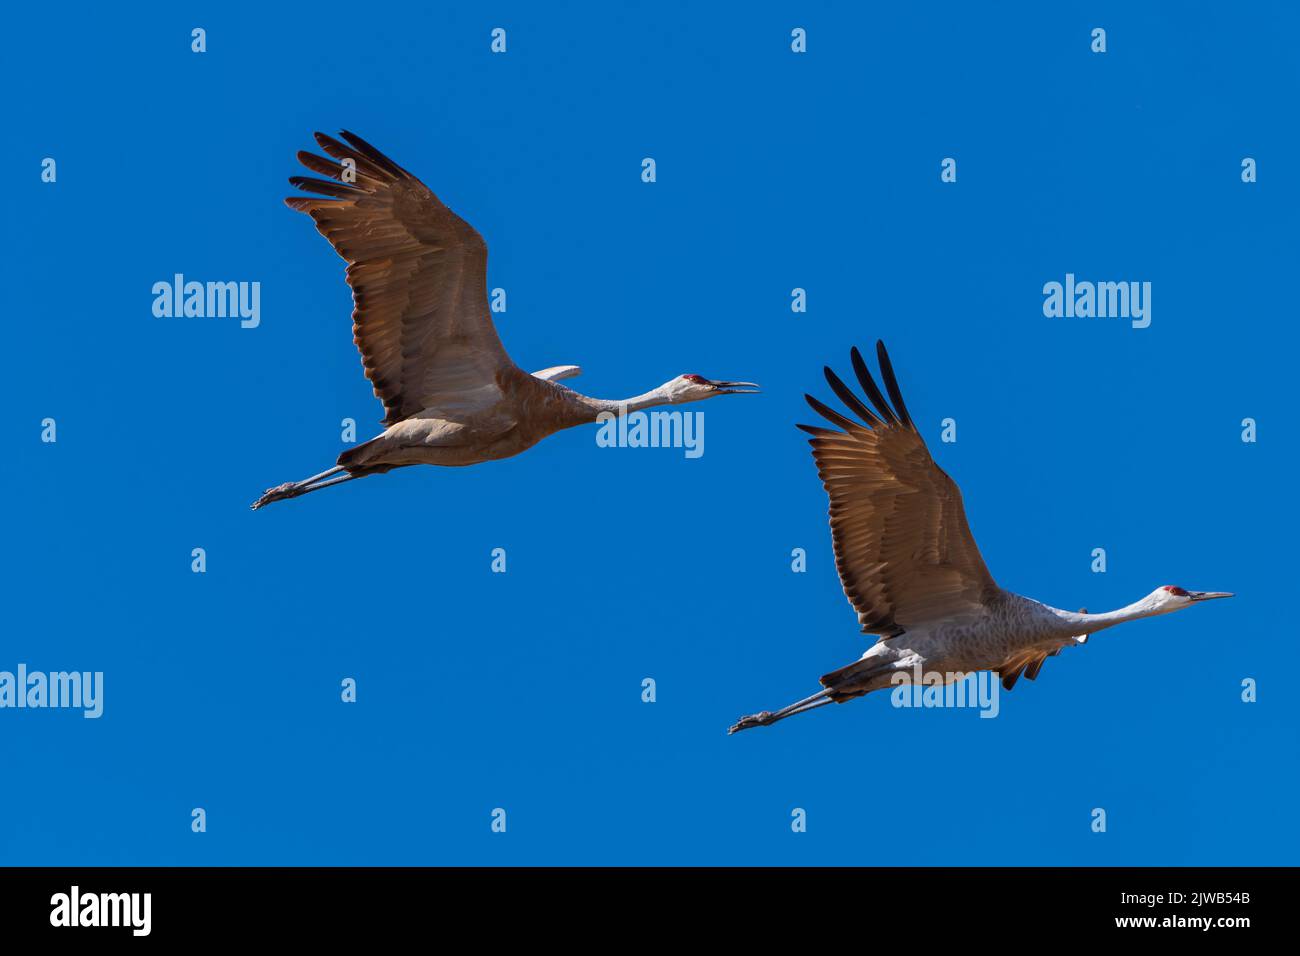 A Pair of Sandhill Cranes in Flight at the Monte Vista National Wildlife Refuge in Colorado Stock Photo